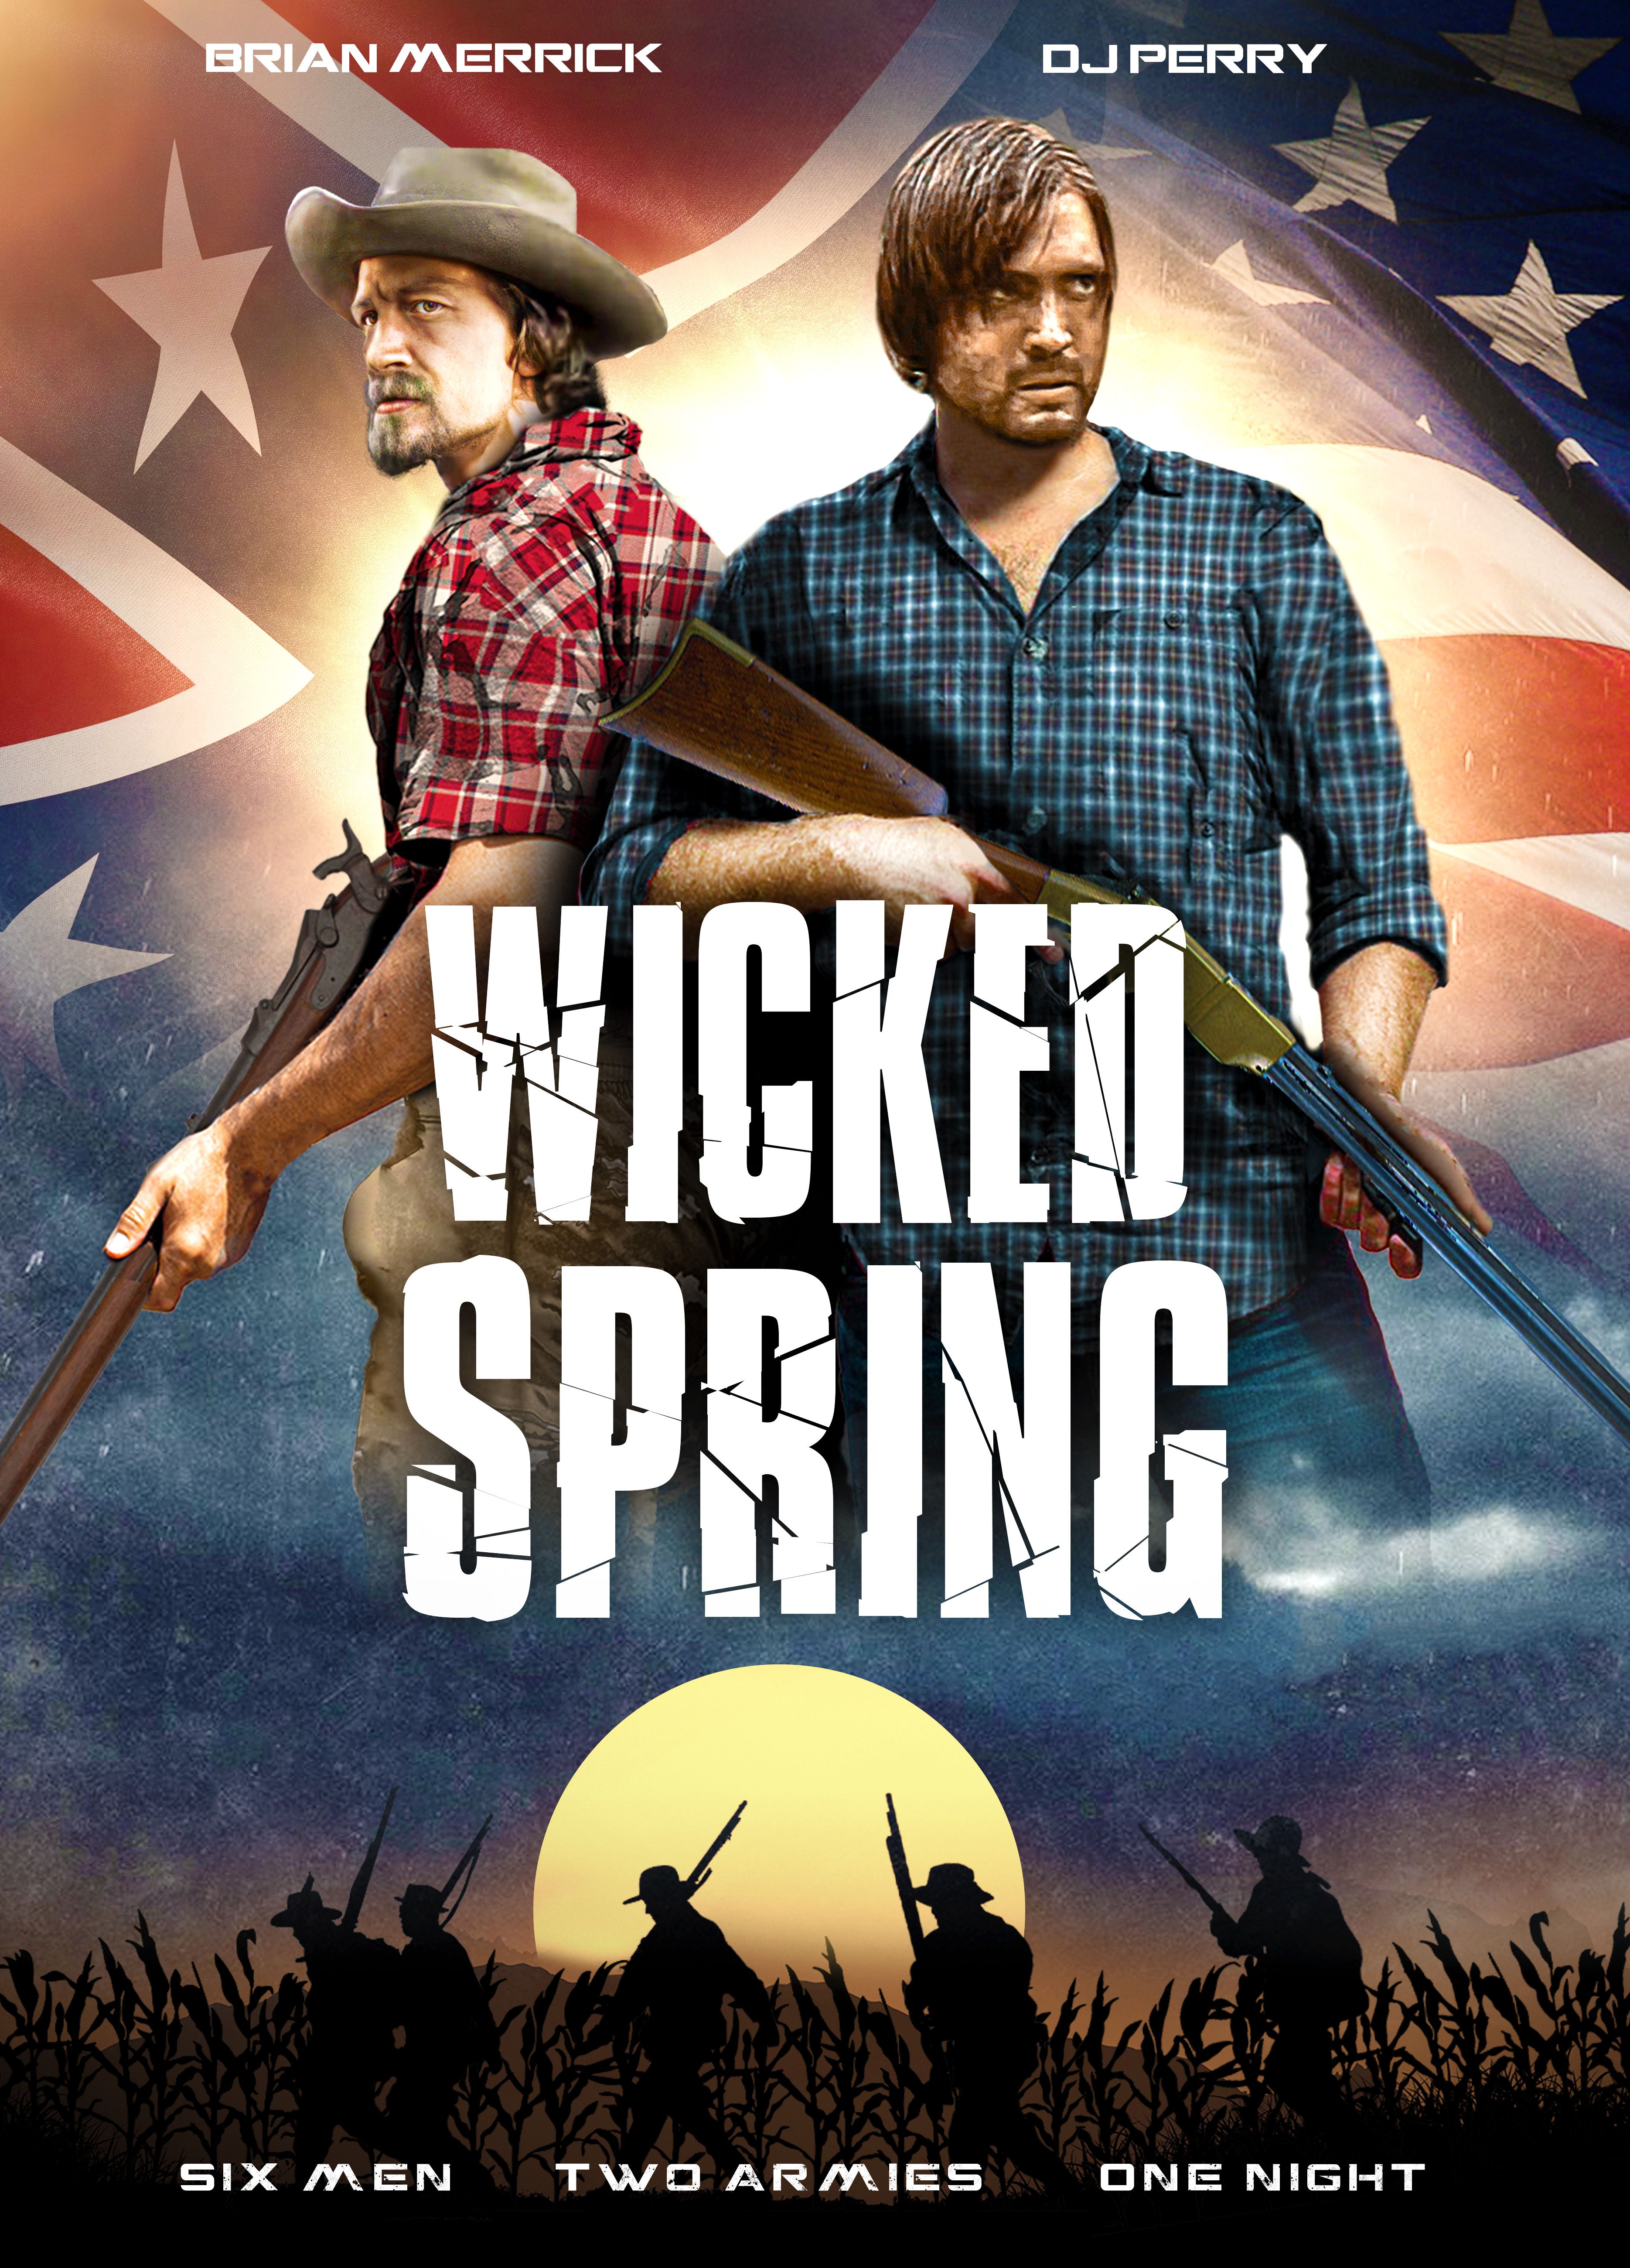 Wicked Spring (2002) starring Brian Merrick on DVD on DVD